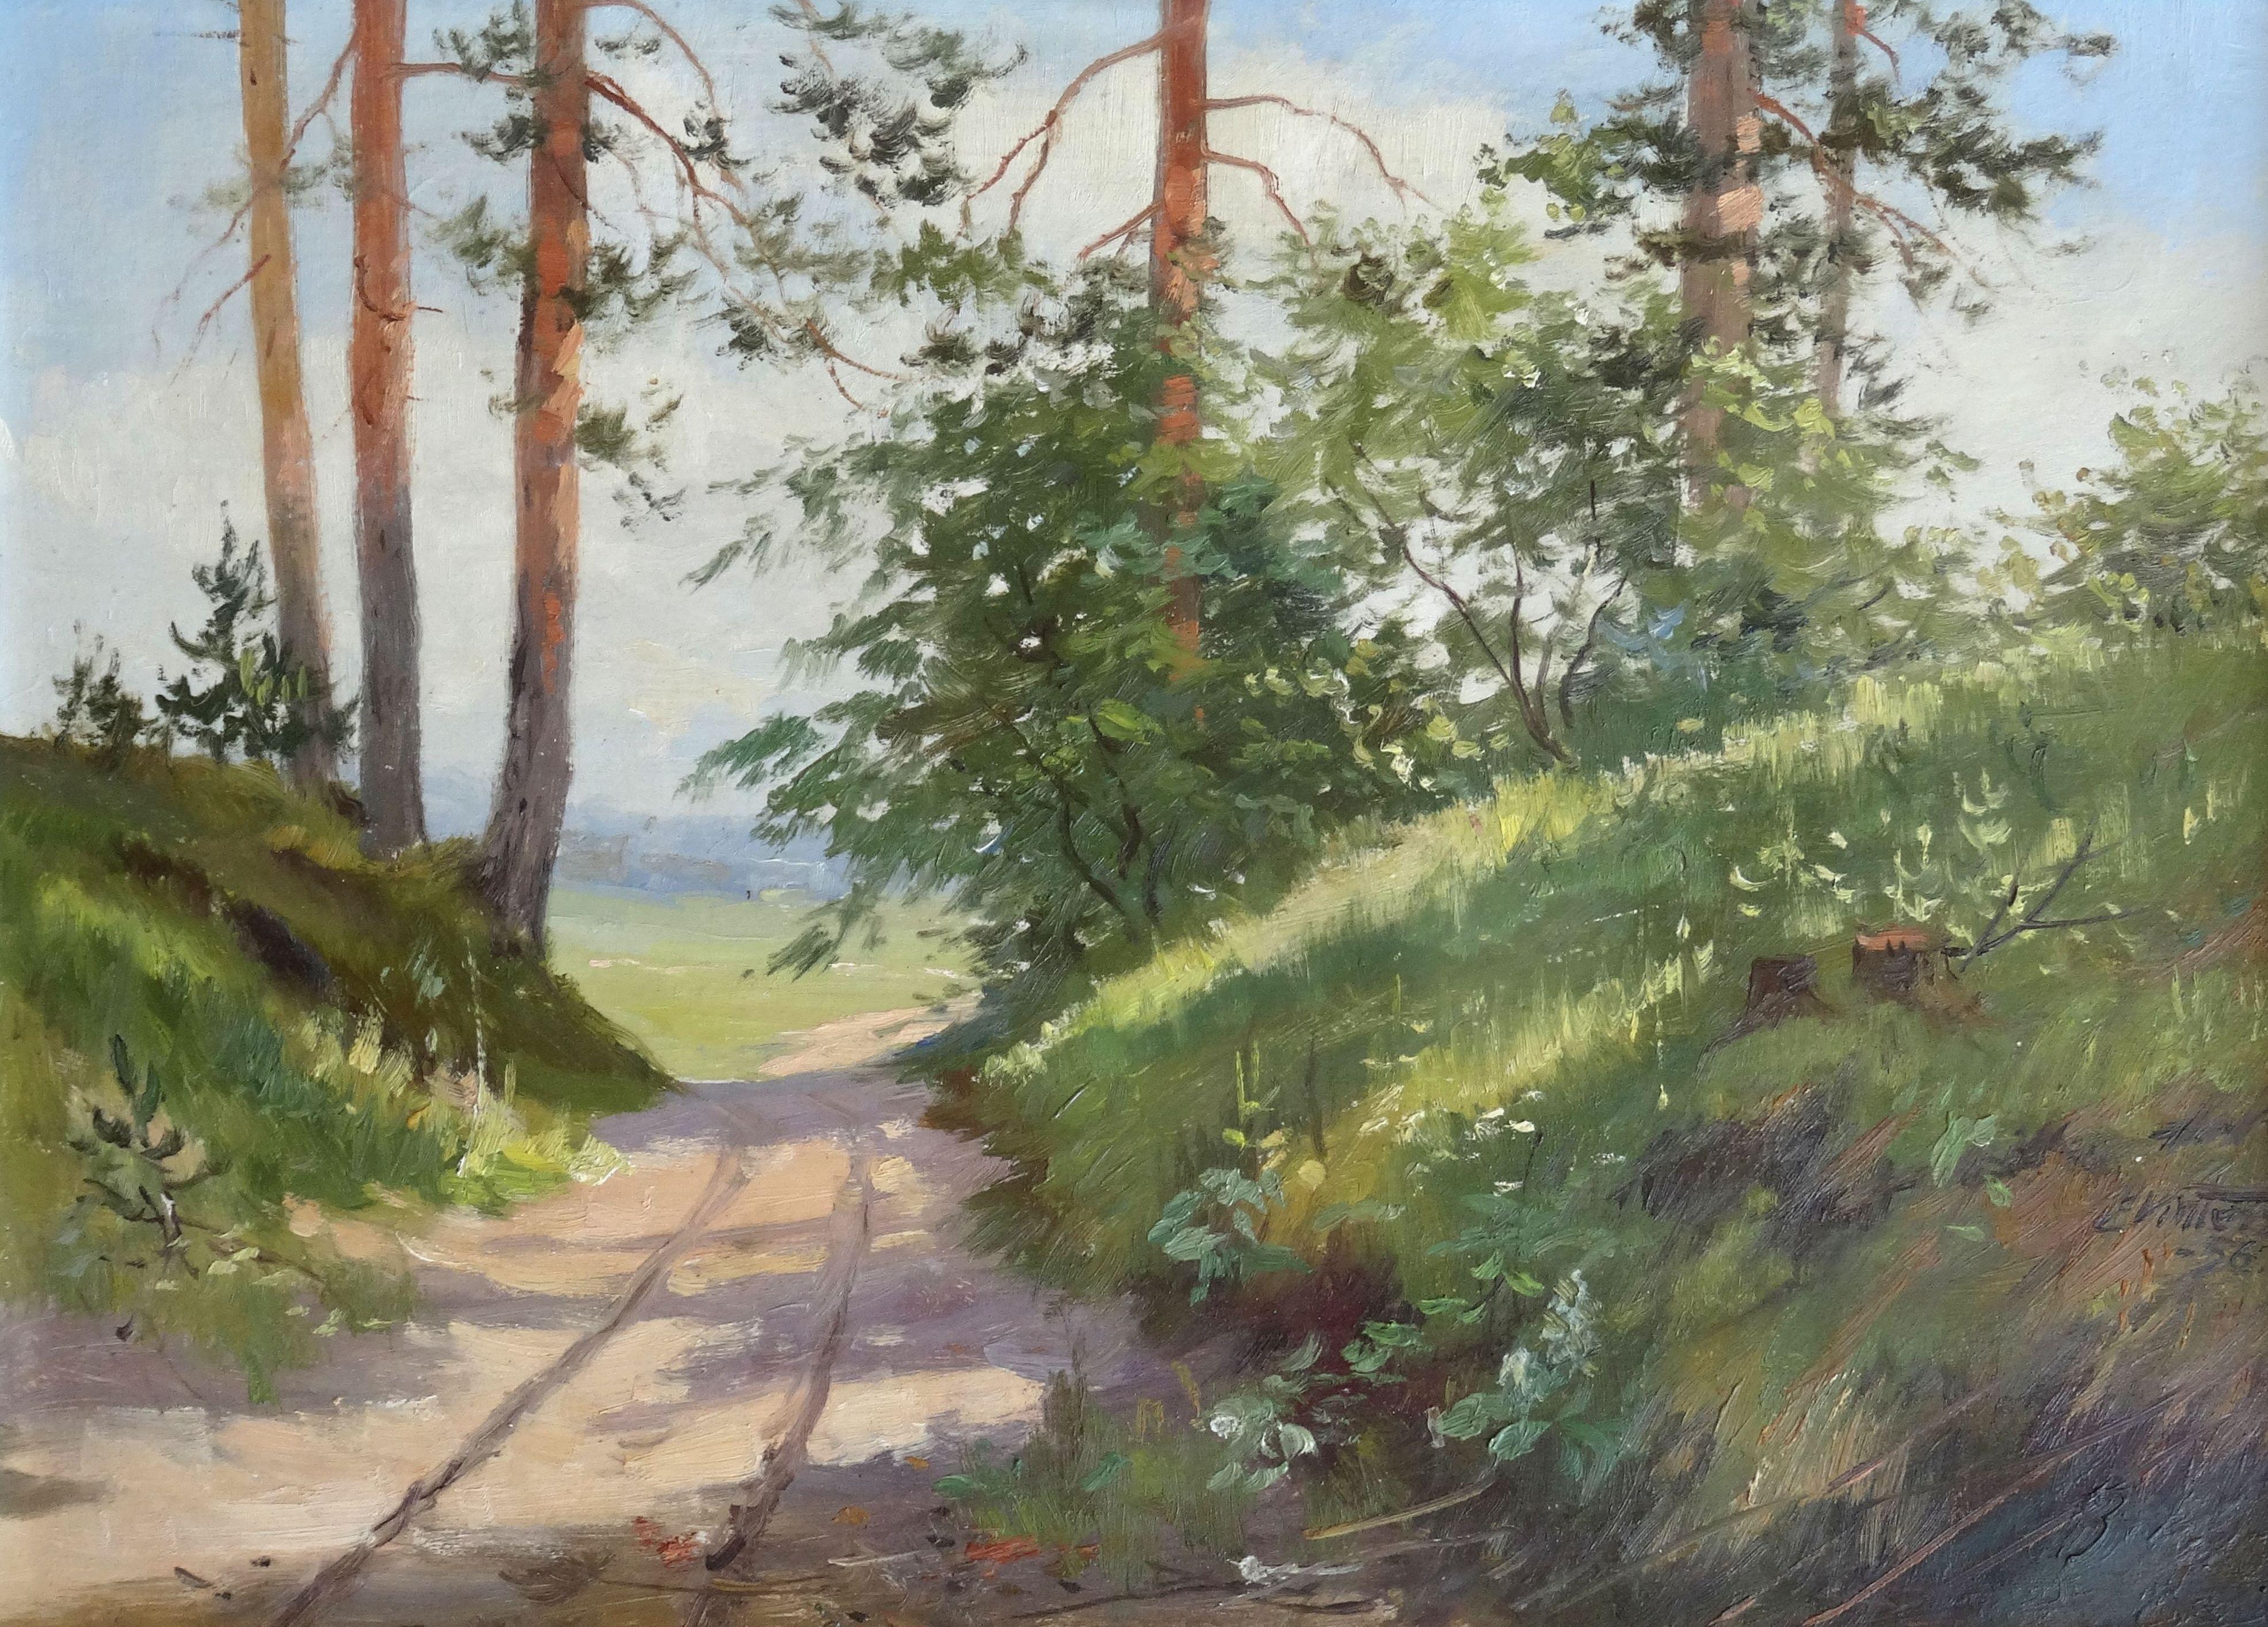 Edgars Vinters Landscape Painting - Forest Road. 1956, cardboard, oil, 32.5x44 cm